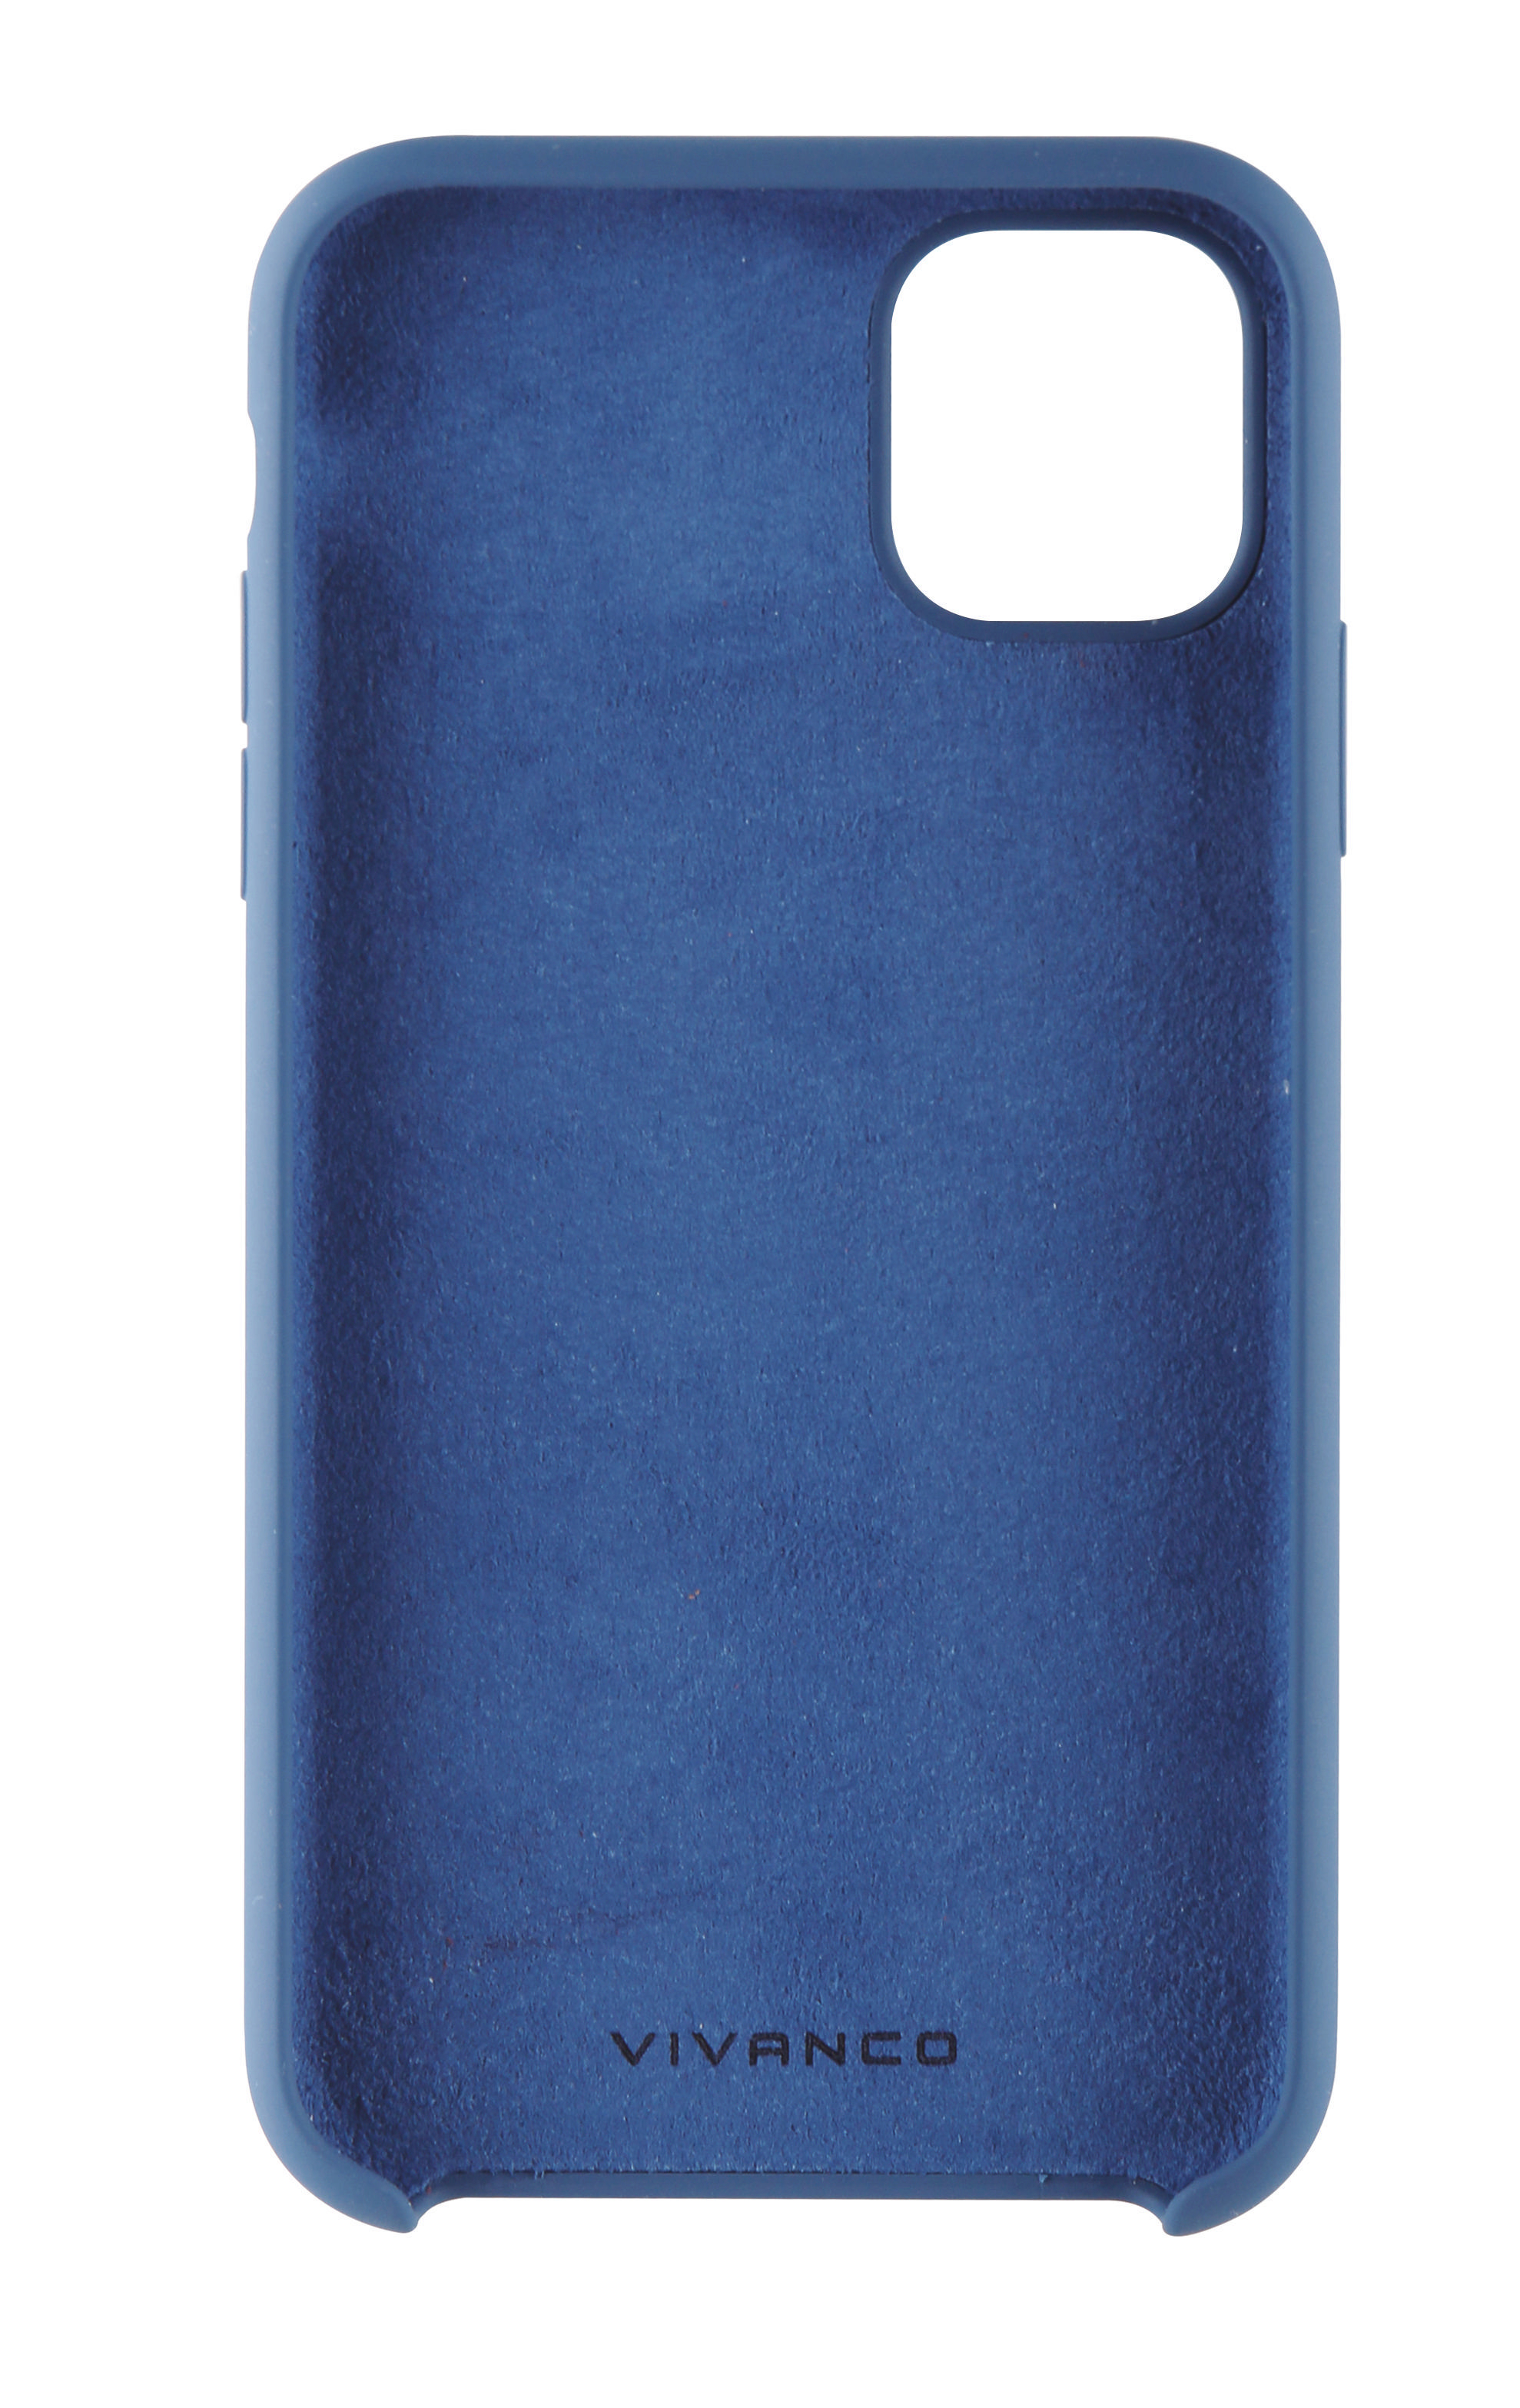 Pro, 11 VIVANCO Apple, Blau iPhone Backcover, , 61761